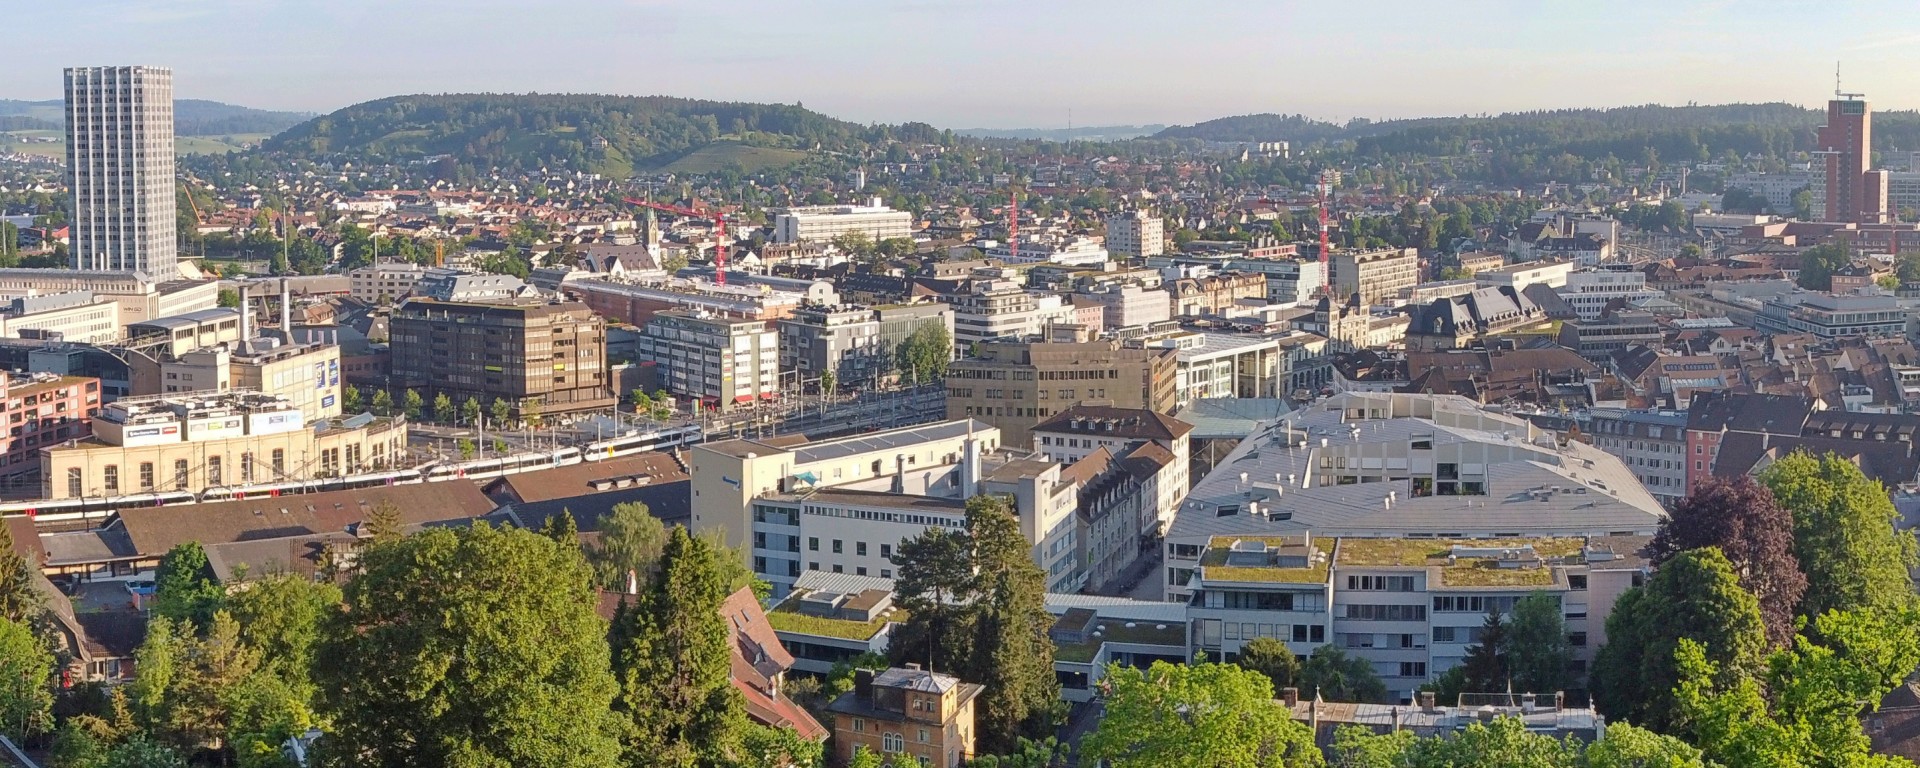 Vontobel in Winterthur - Panorama over the city of Winterthur